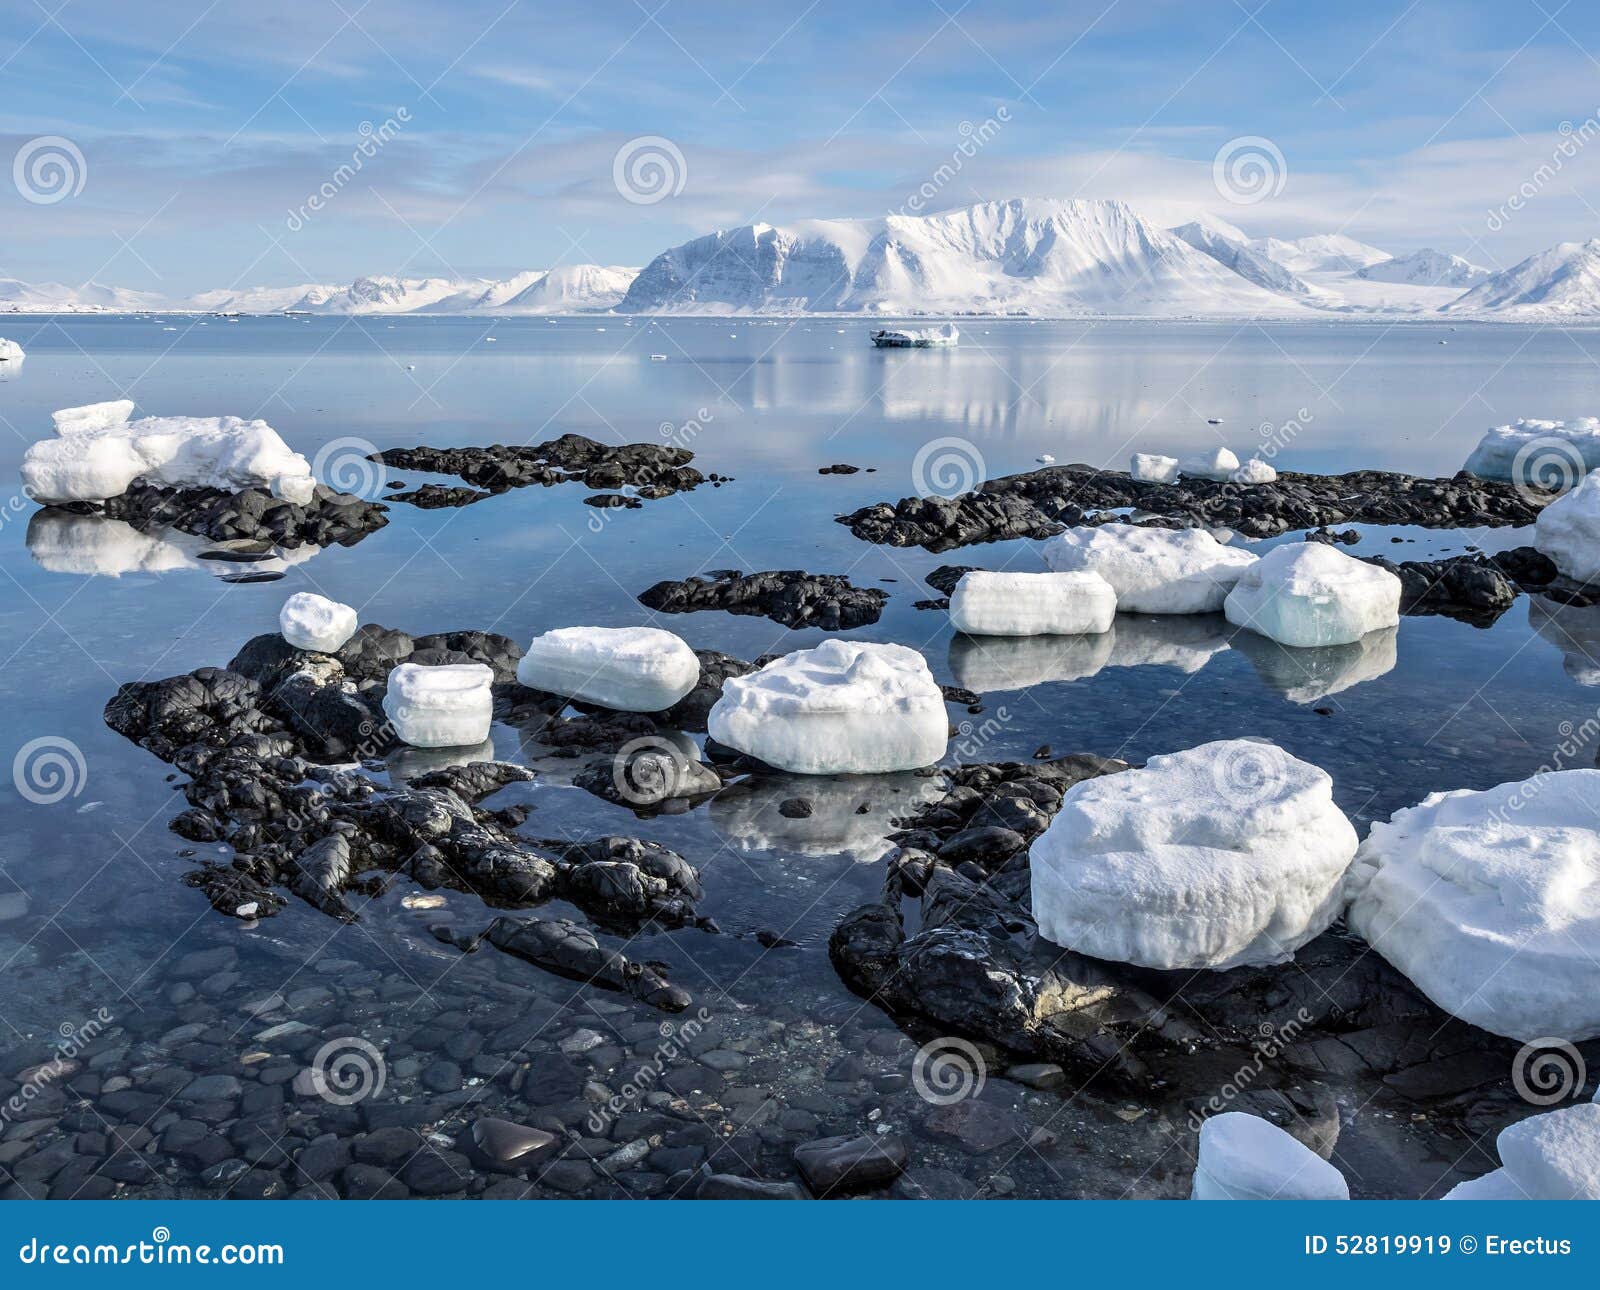 arctic landscape - ice, sea, mountains, glaciers - spitsbergen, svalbard